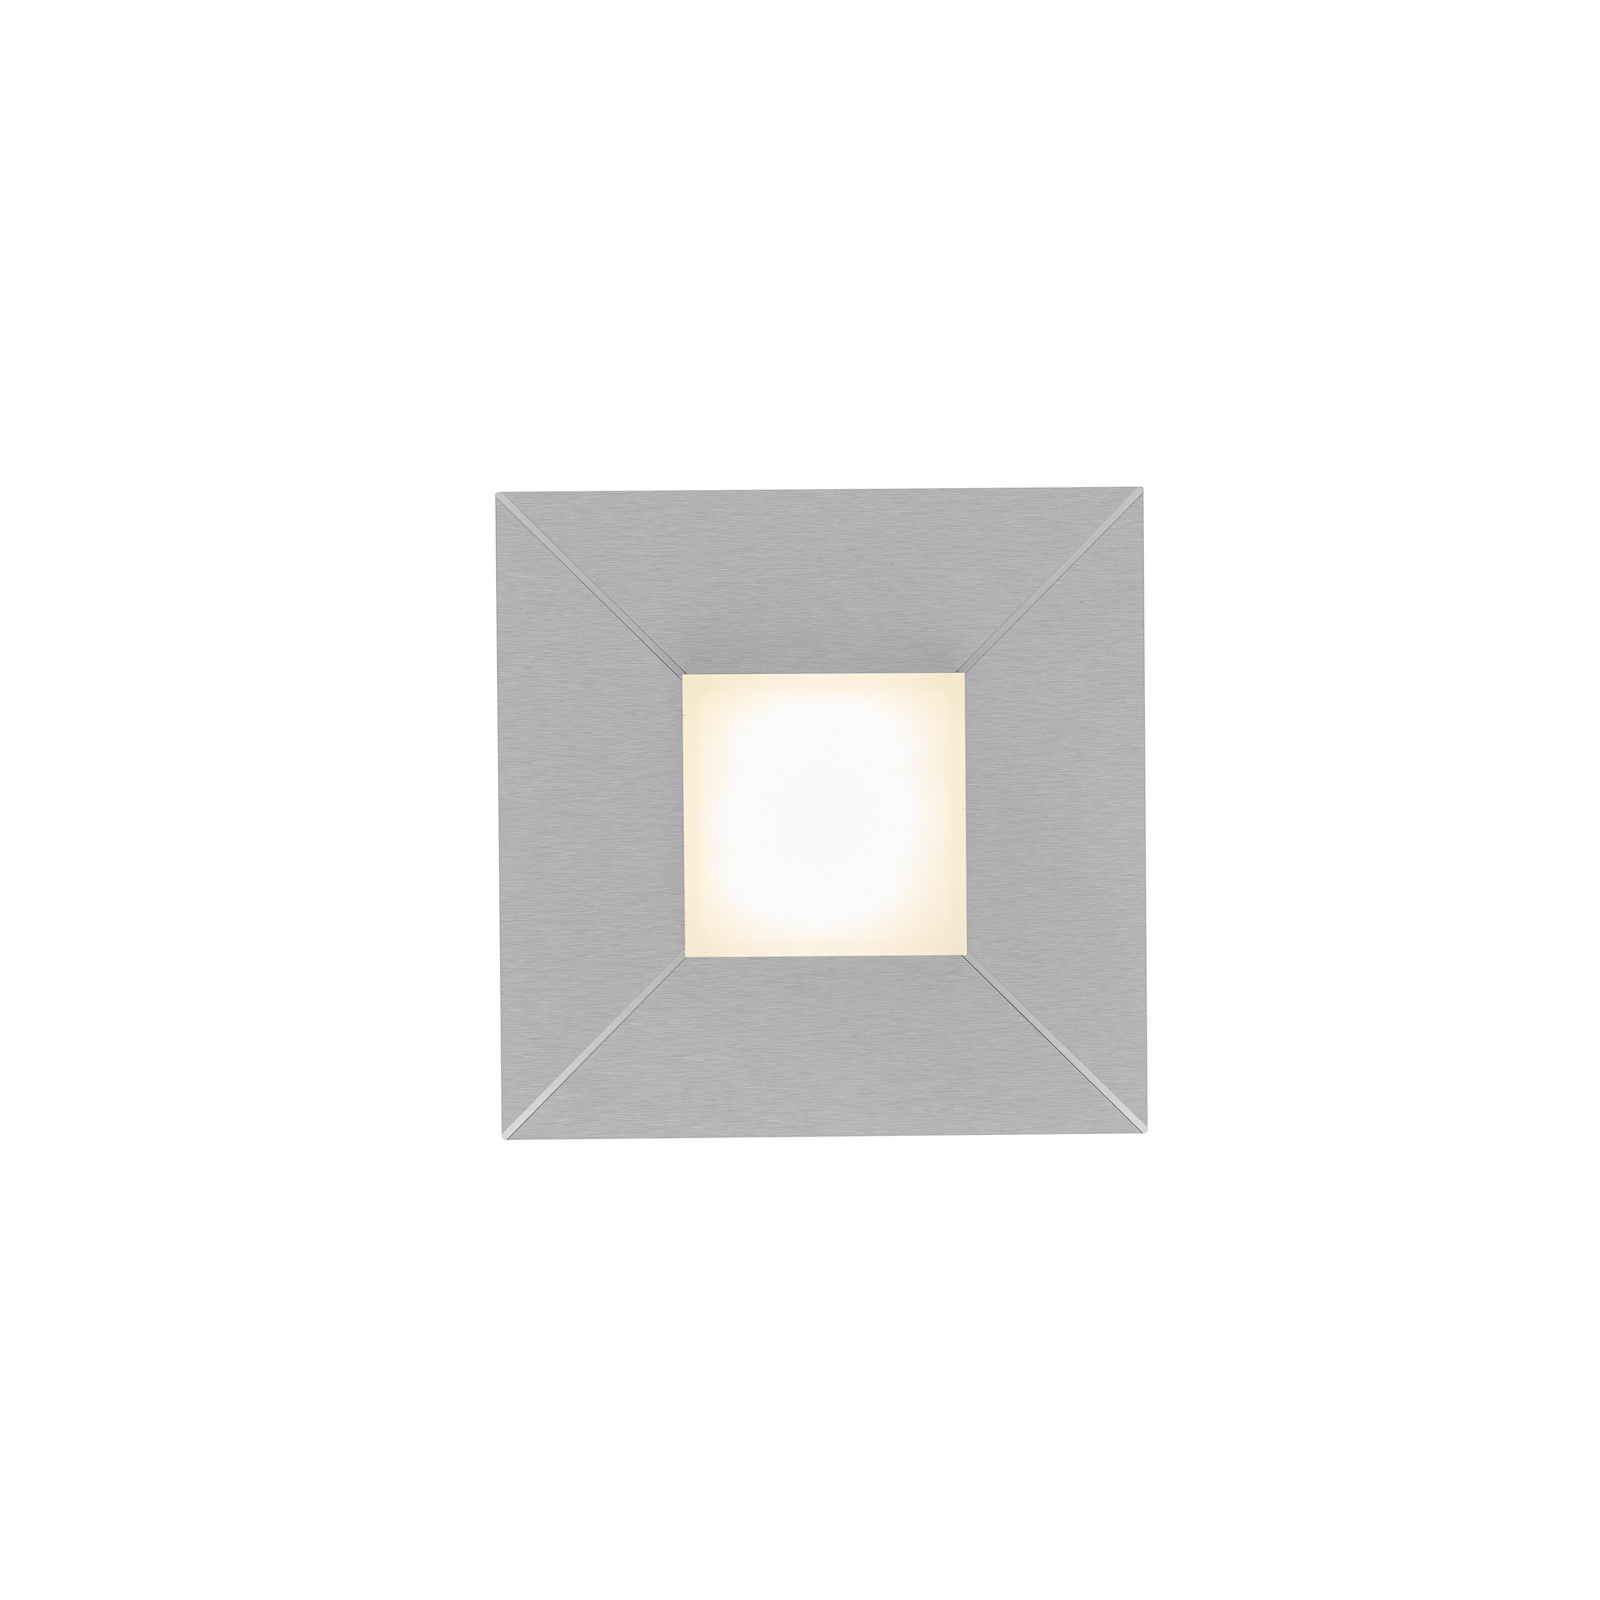 BANKAMP Diamond kattovalaisin, 17x17 cm, hopea